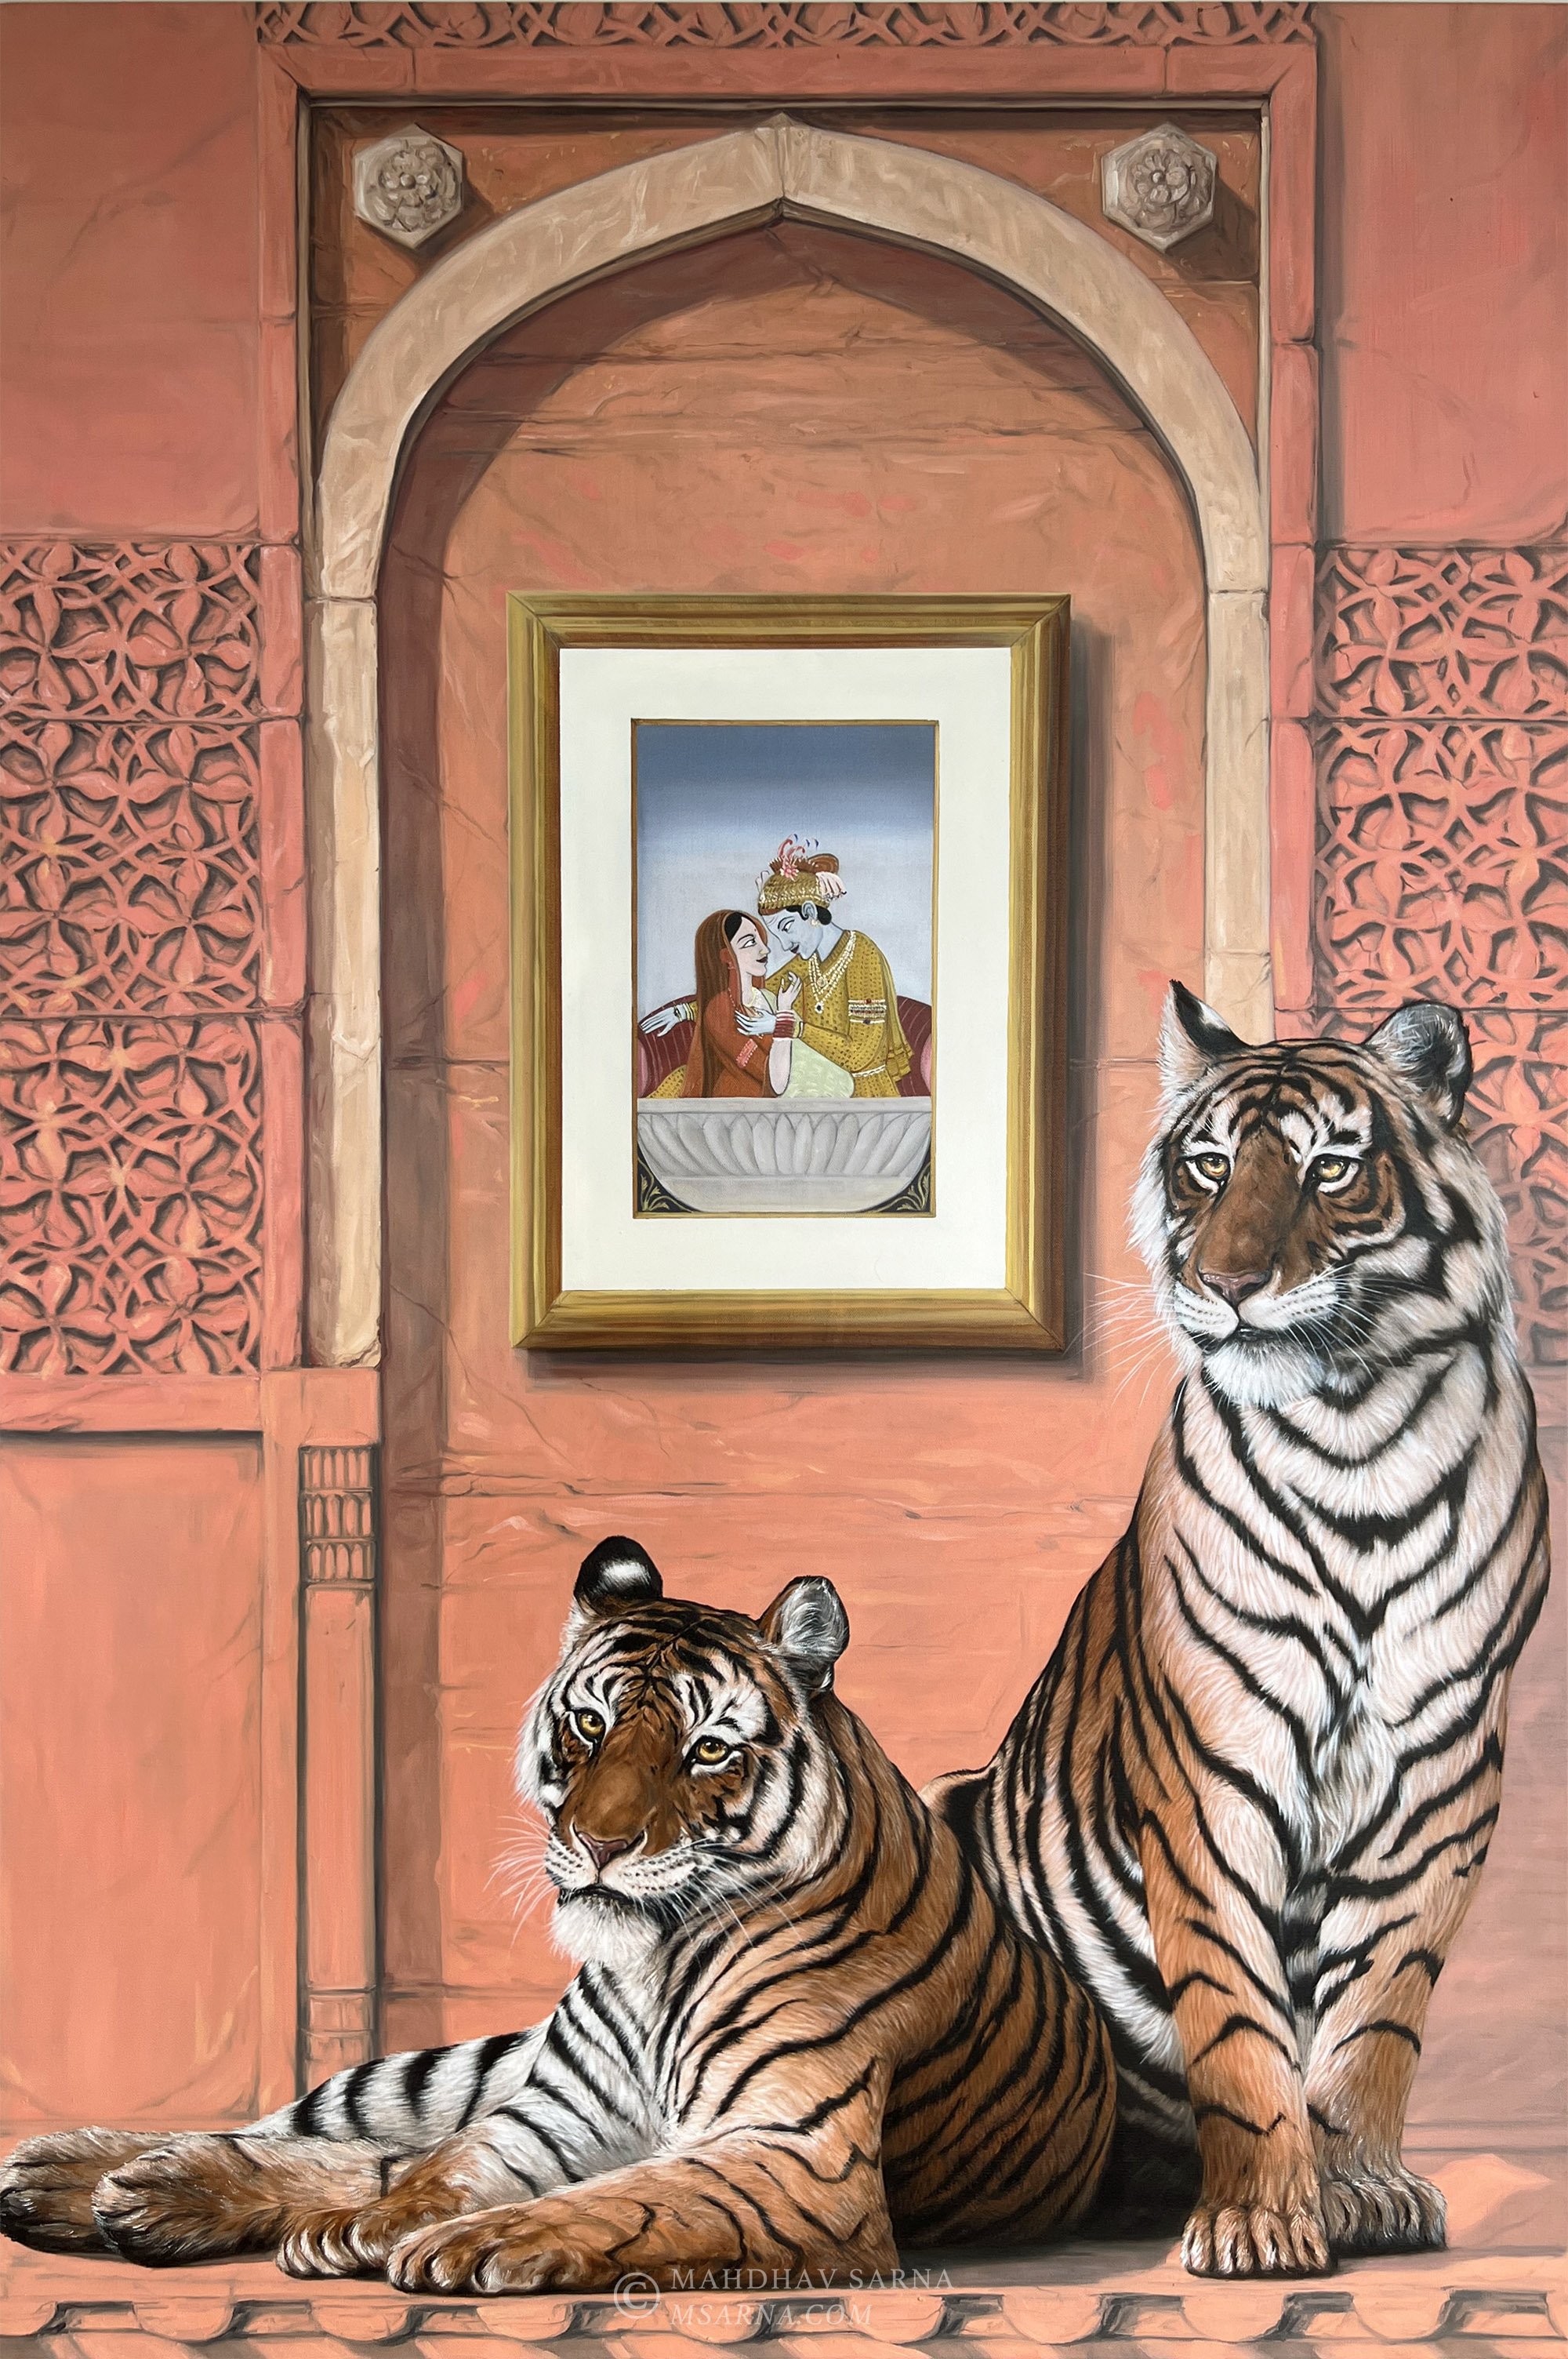 india bengal tiger oil painting royl wildlife art mahdhav sarna 01.jpg